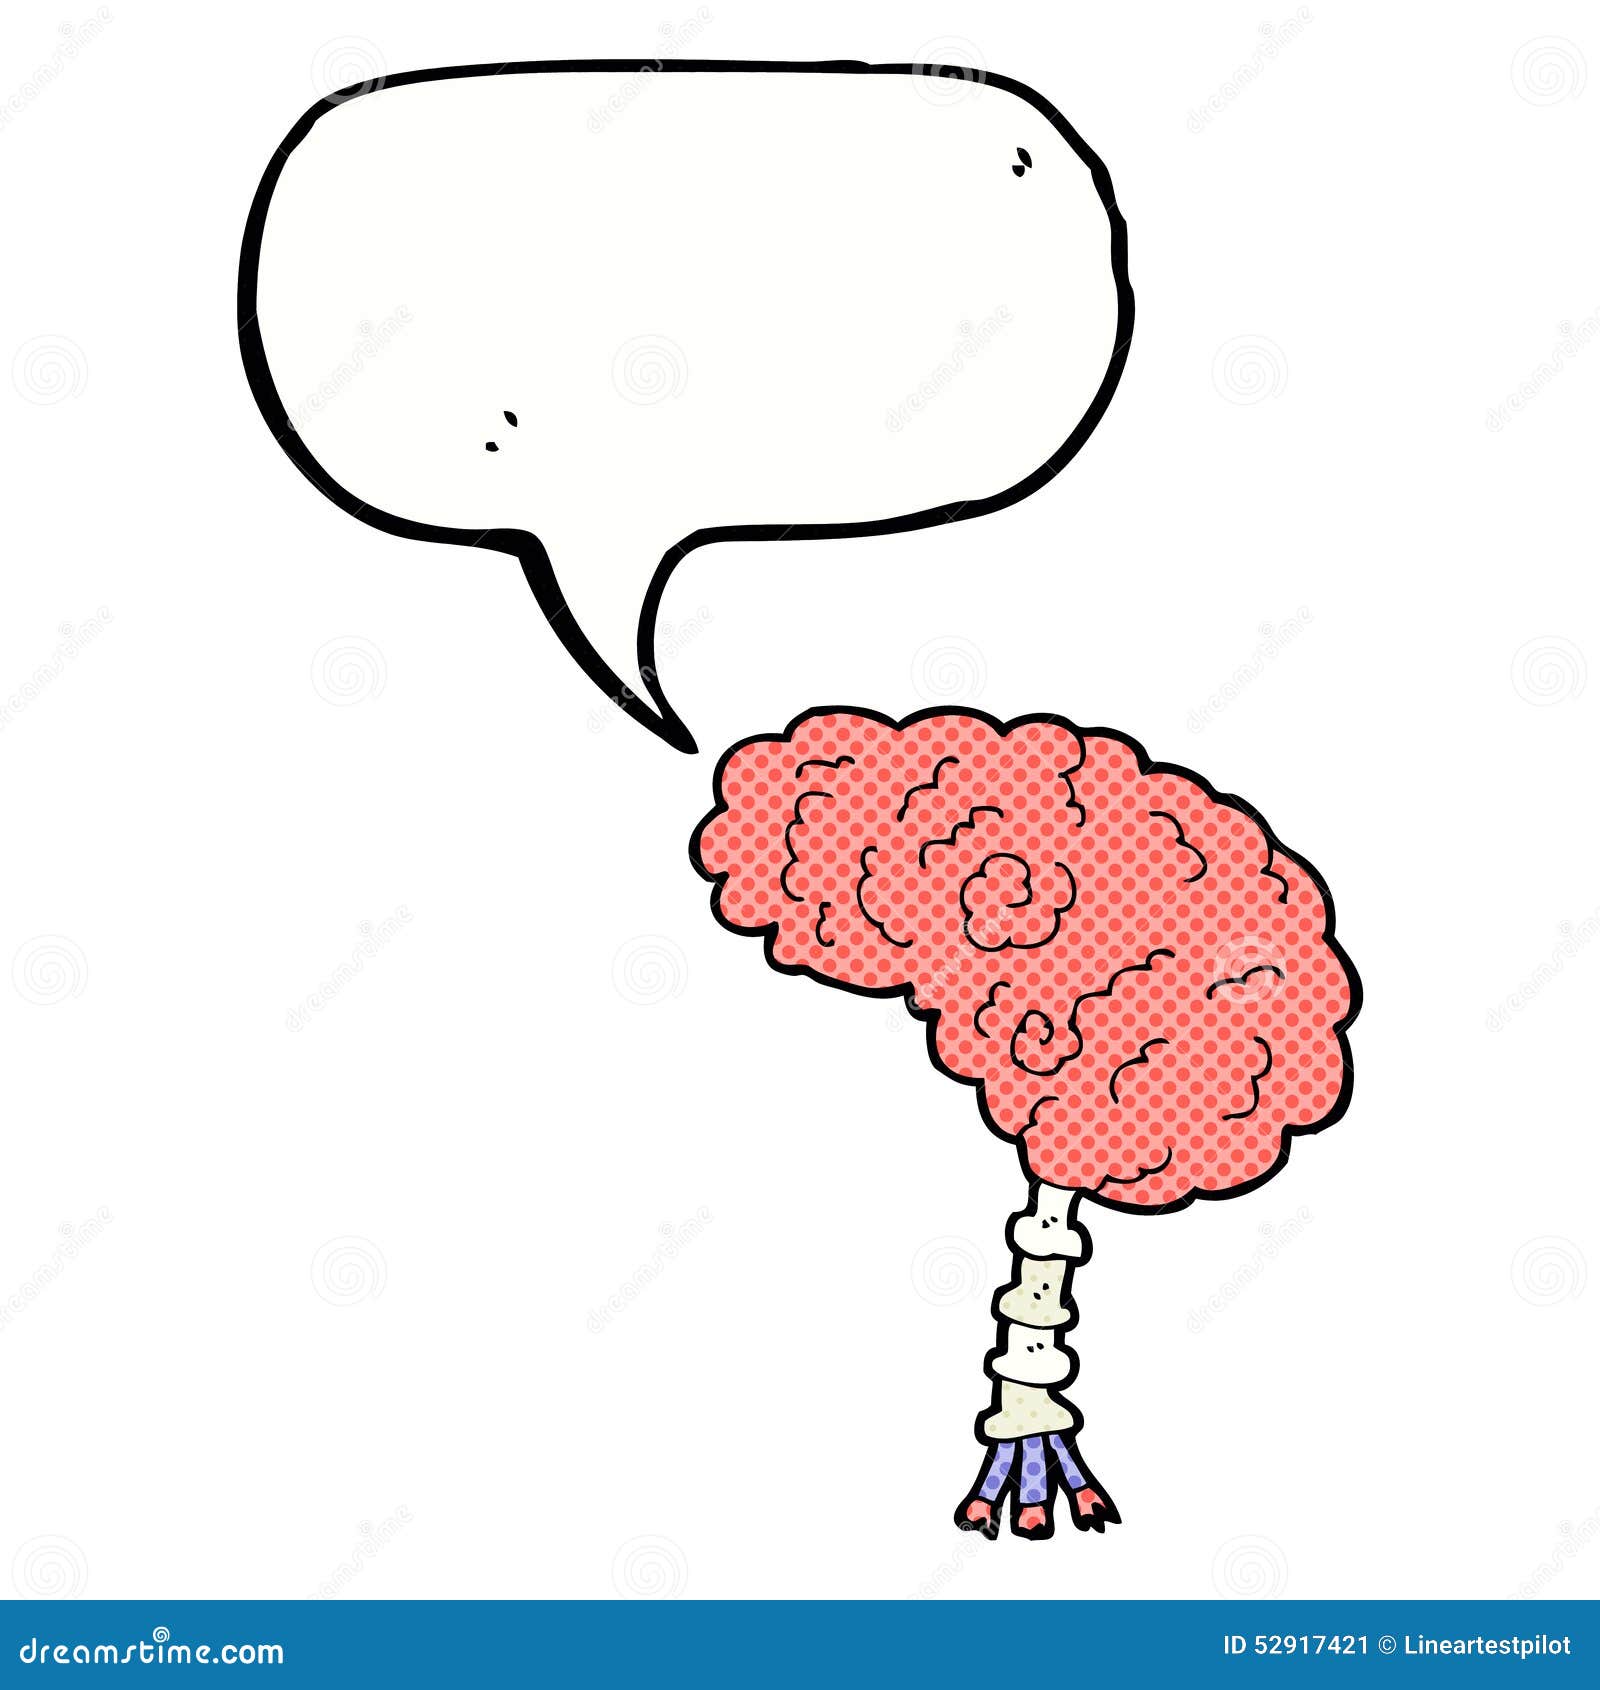 Speech brain. Карикатуры на мозг и речь. Жена капает на мозг карикатура. Погода мозг карикатура.